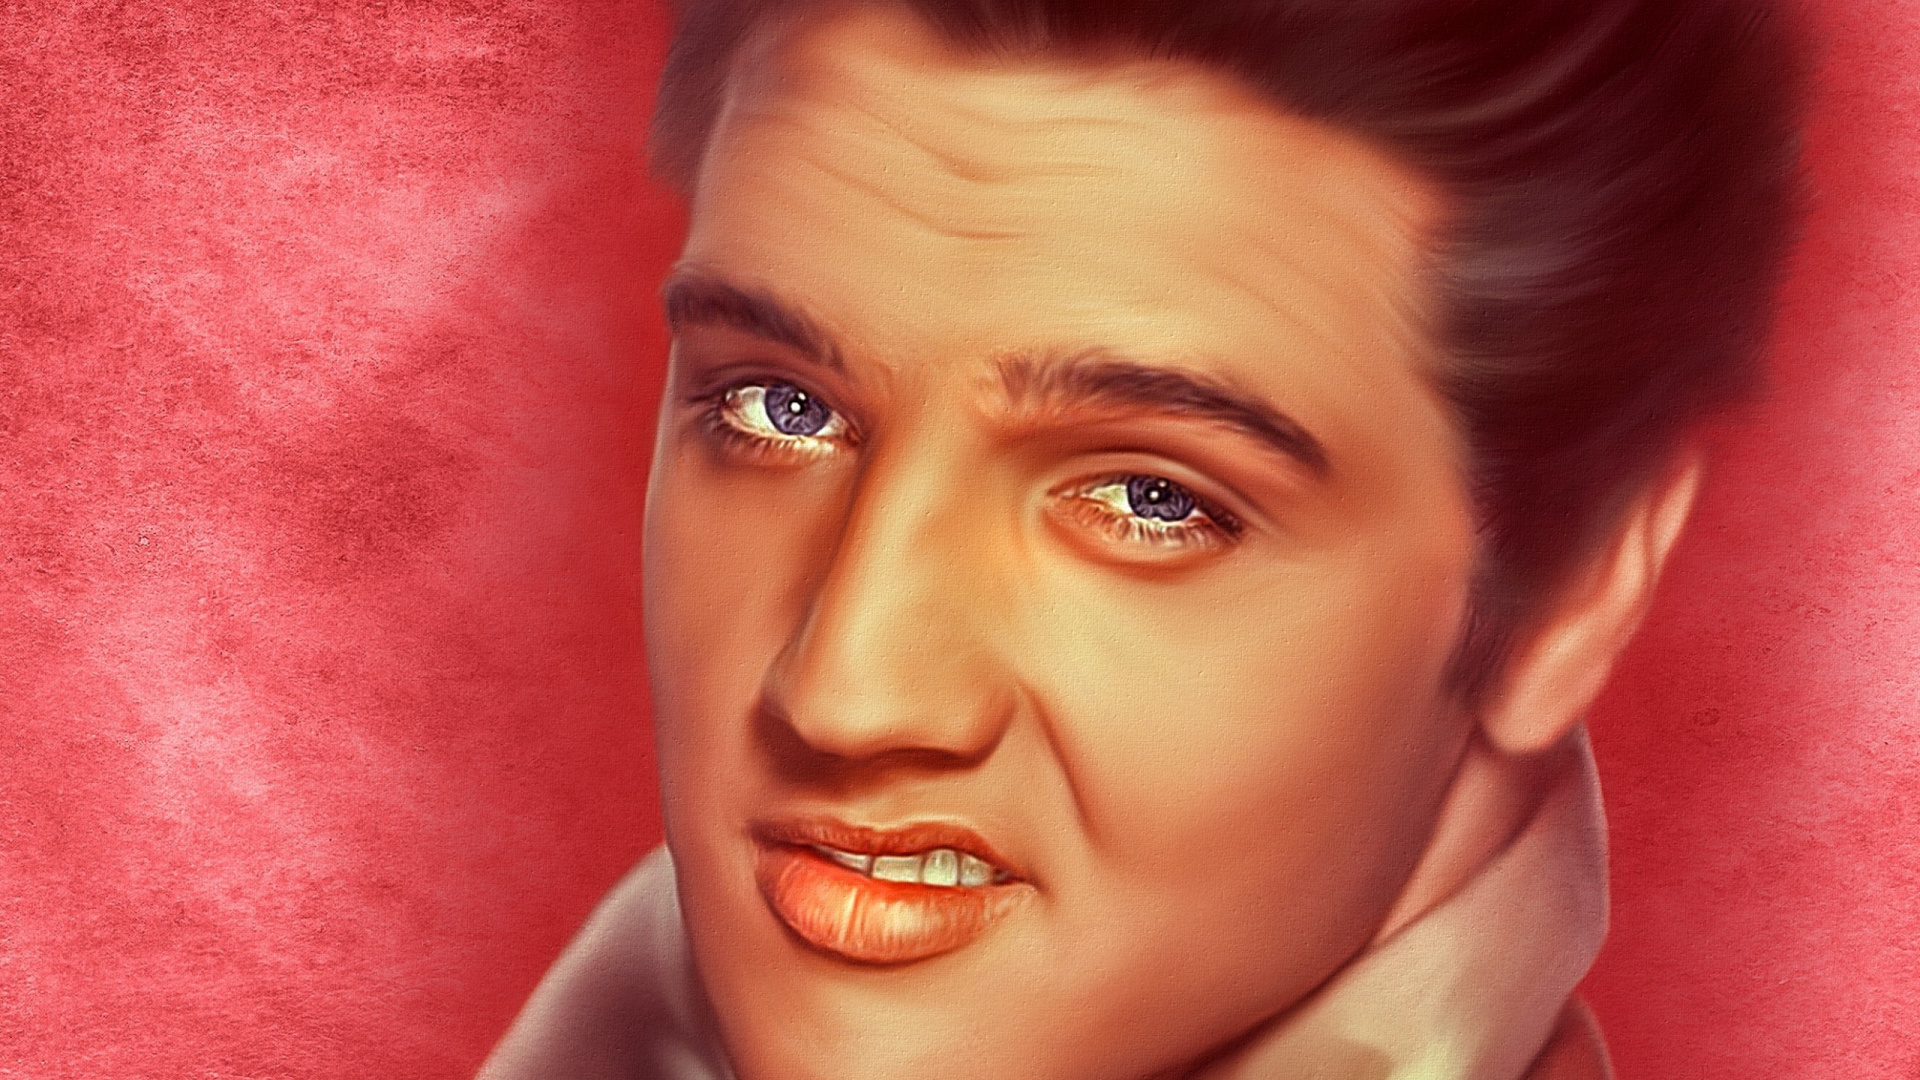 Elvis Presley, Art, Musician, Rock and Roll, Face. Wallpaper in 1920x1080 Resolution